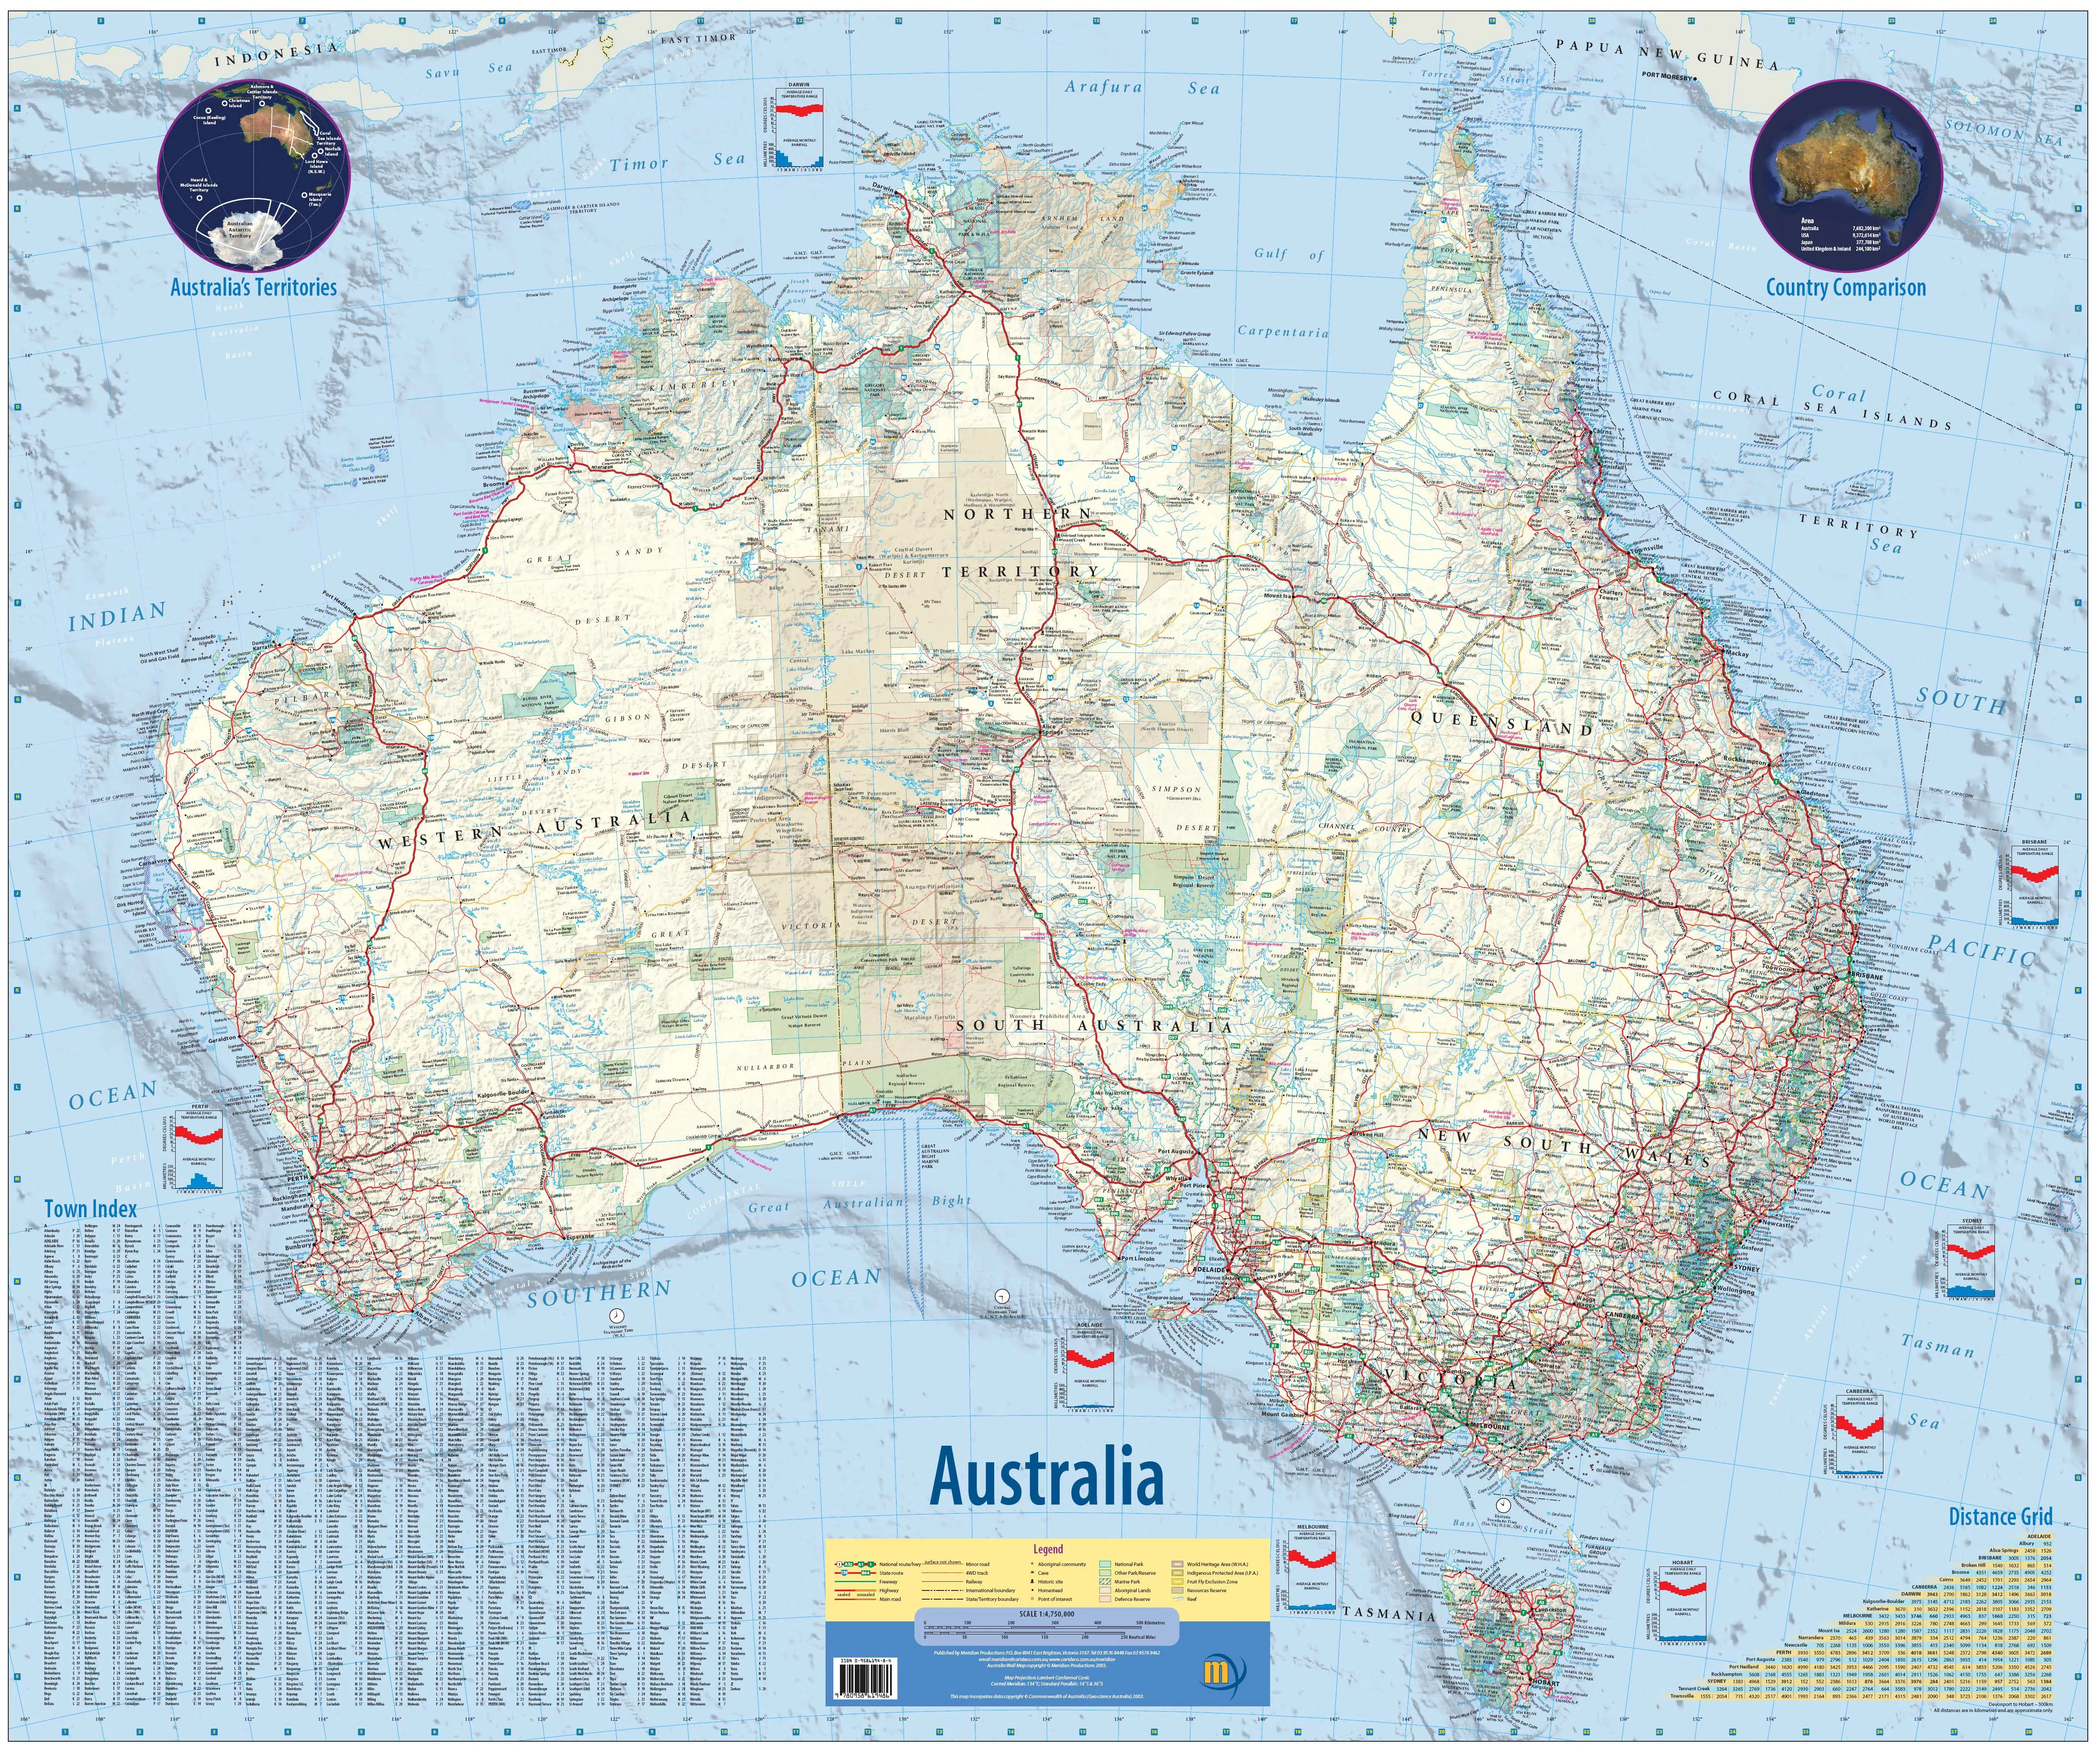 Australia Detailed Map Mapsof net